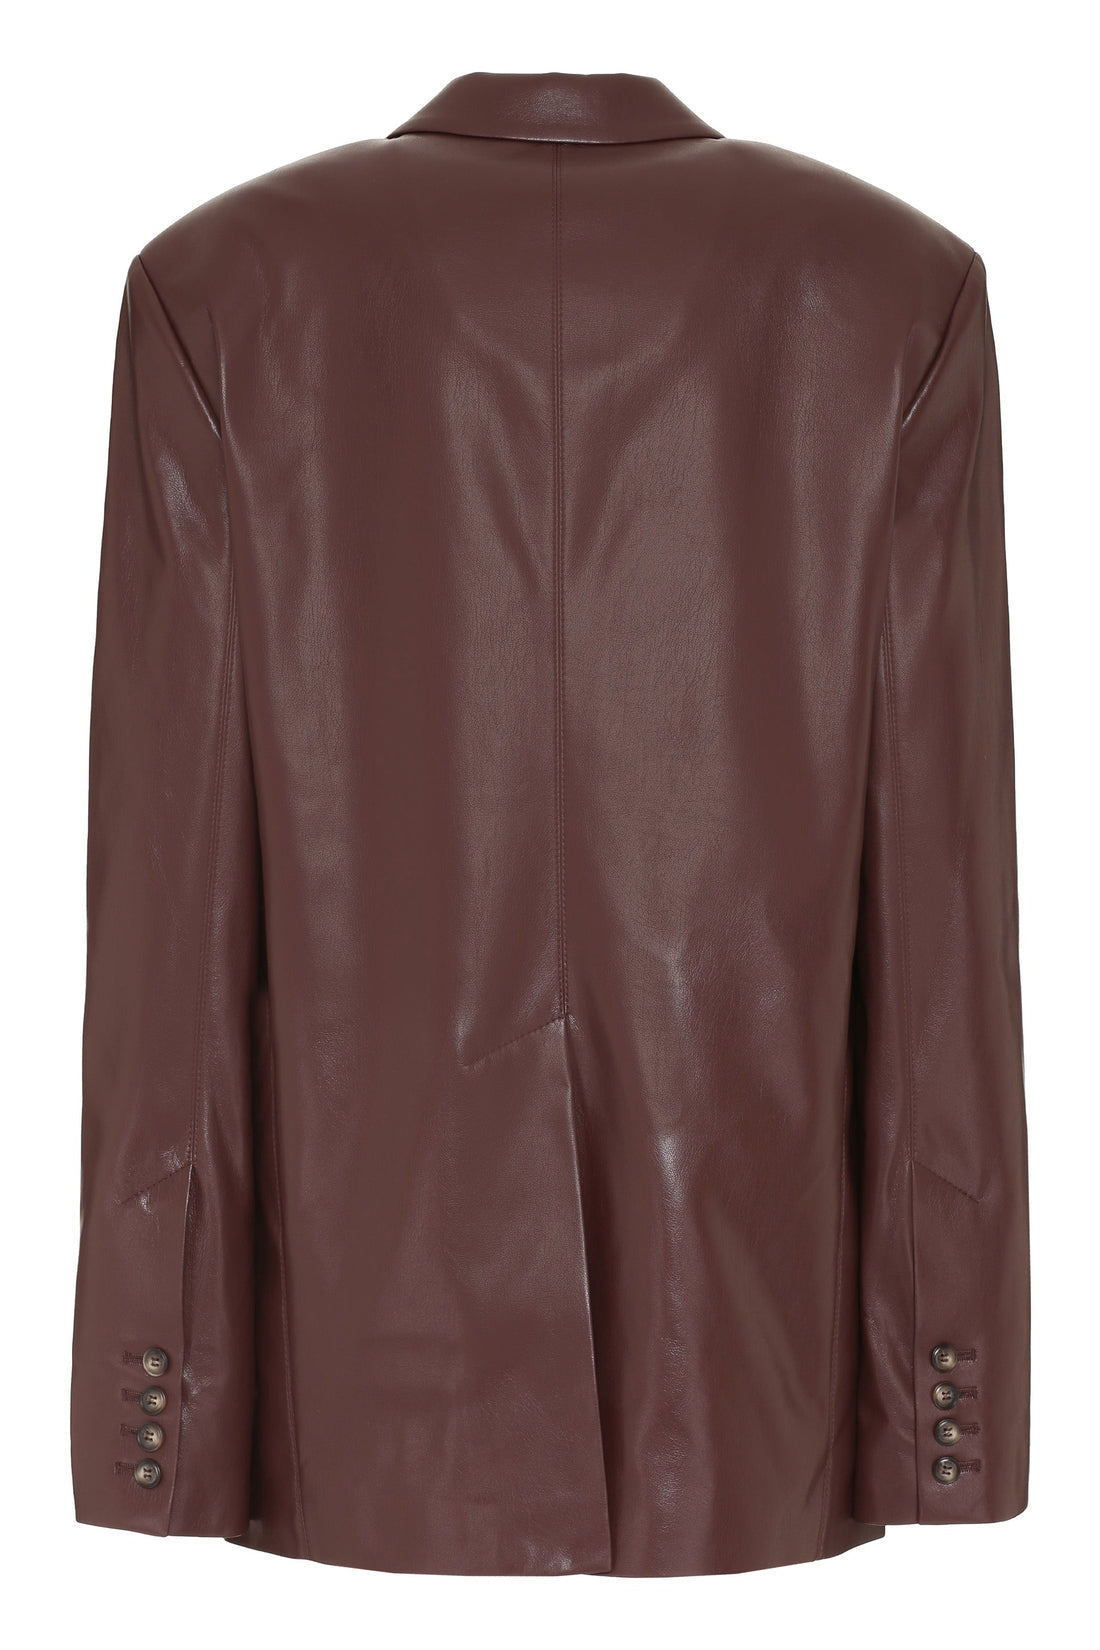 Nanushka-OUTLET-SALE-Ariza vegan leather blazer-ARCHIVIST